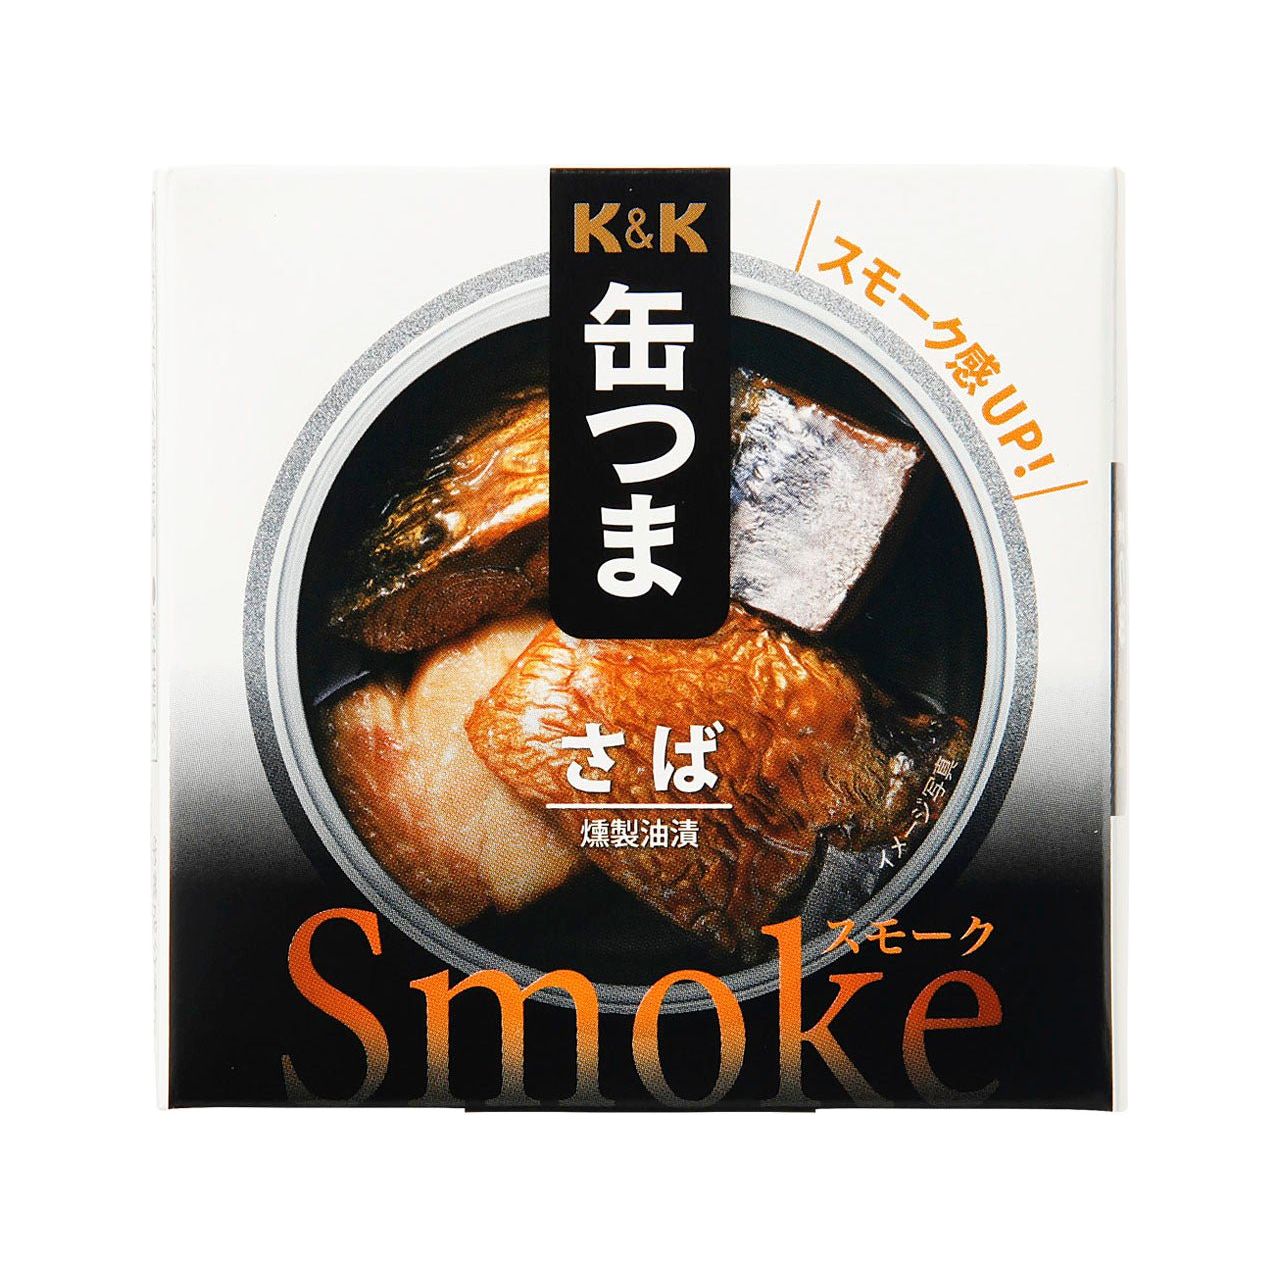 K & K는 Tsuma Smoke 고등어를 만들 수 있습니다